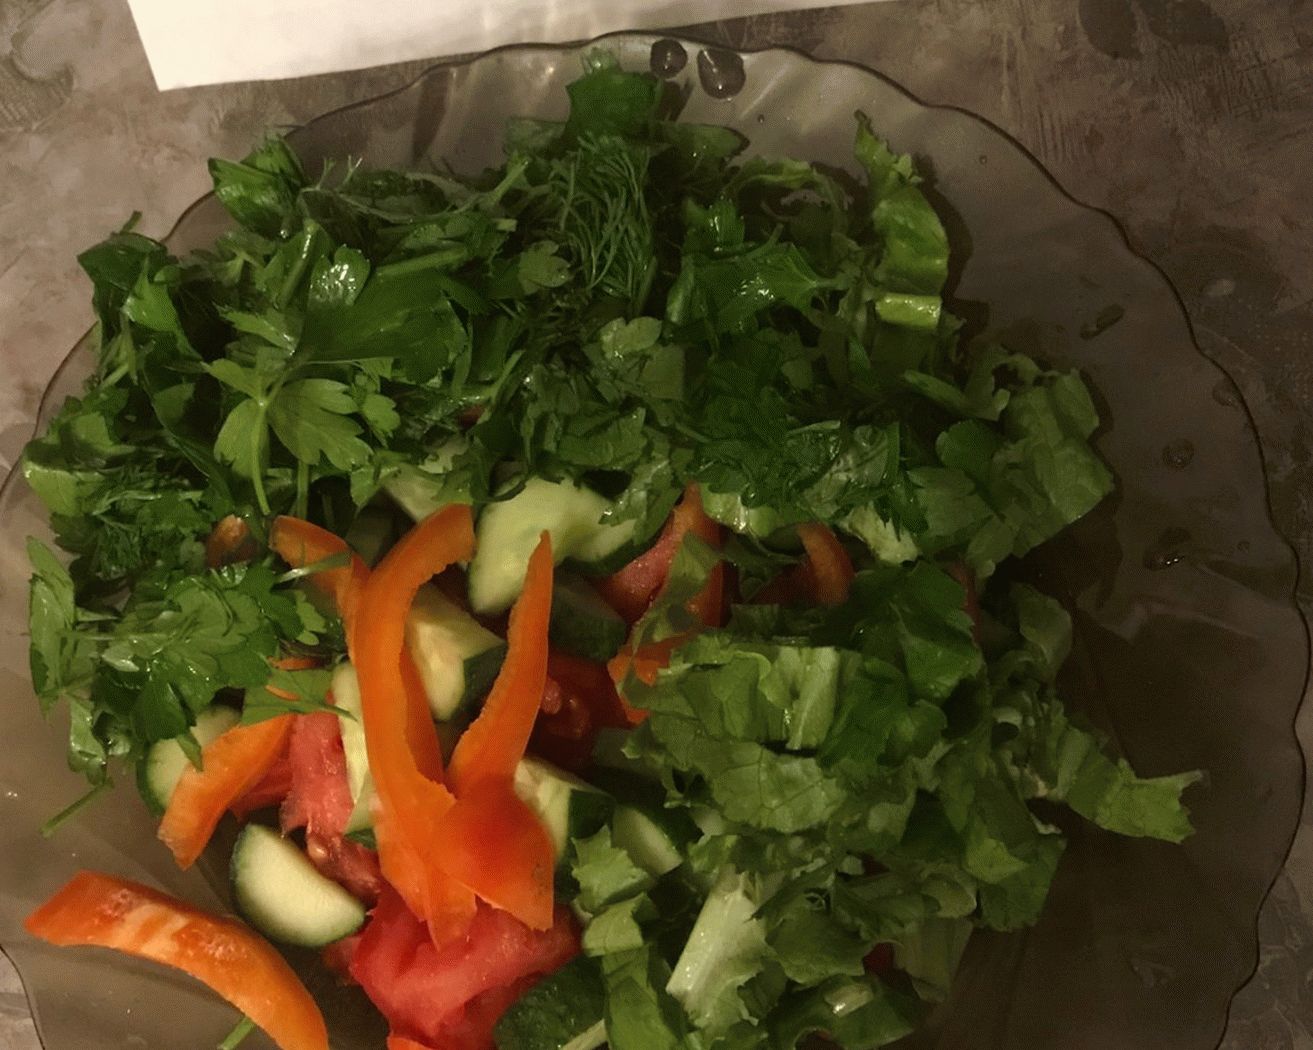 A fresh vegetable salad